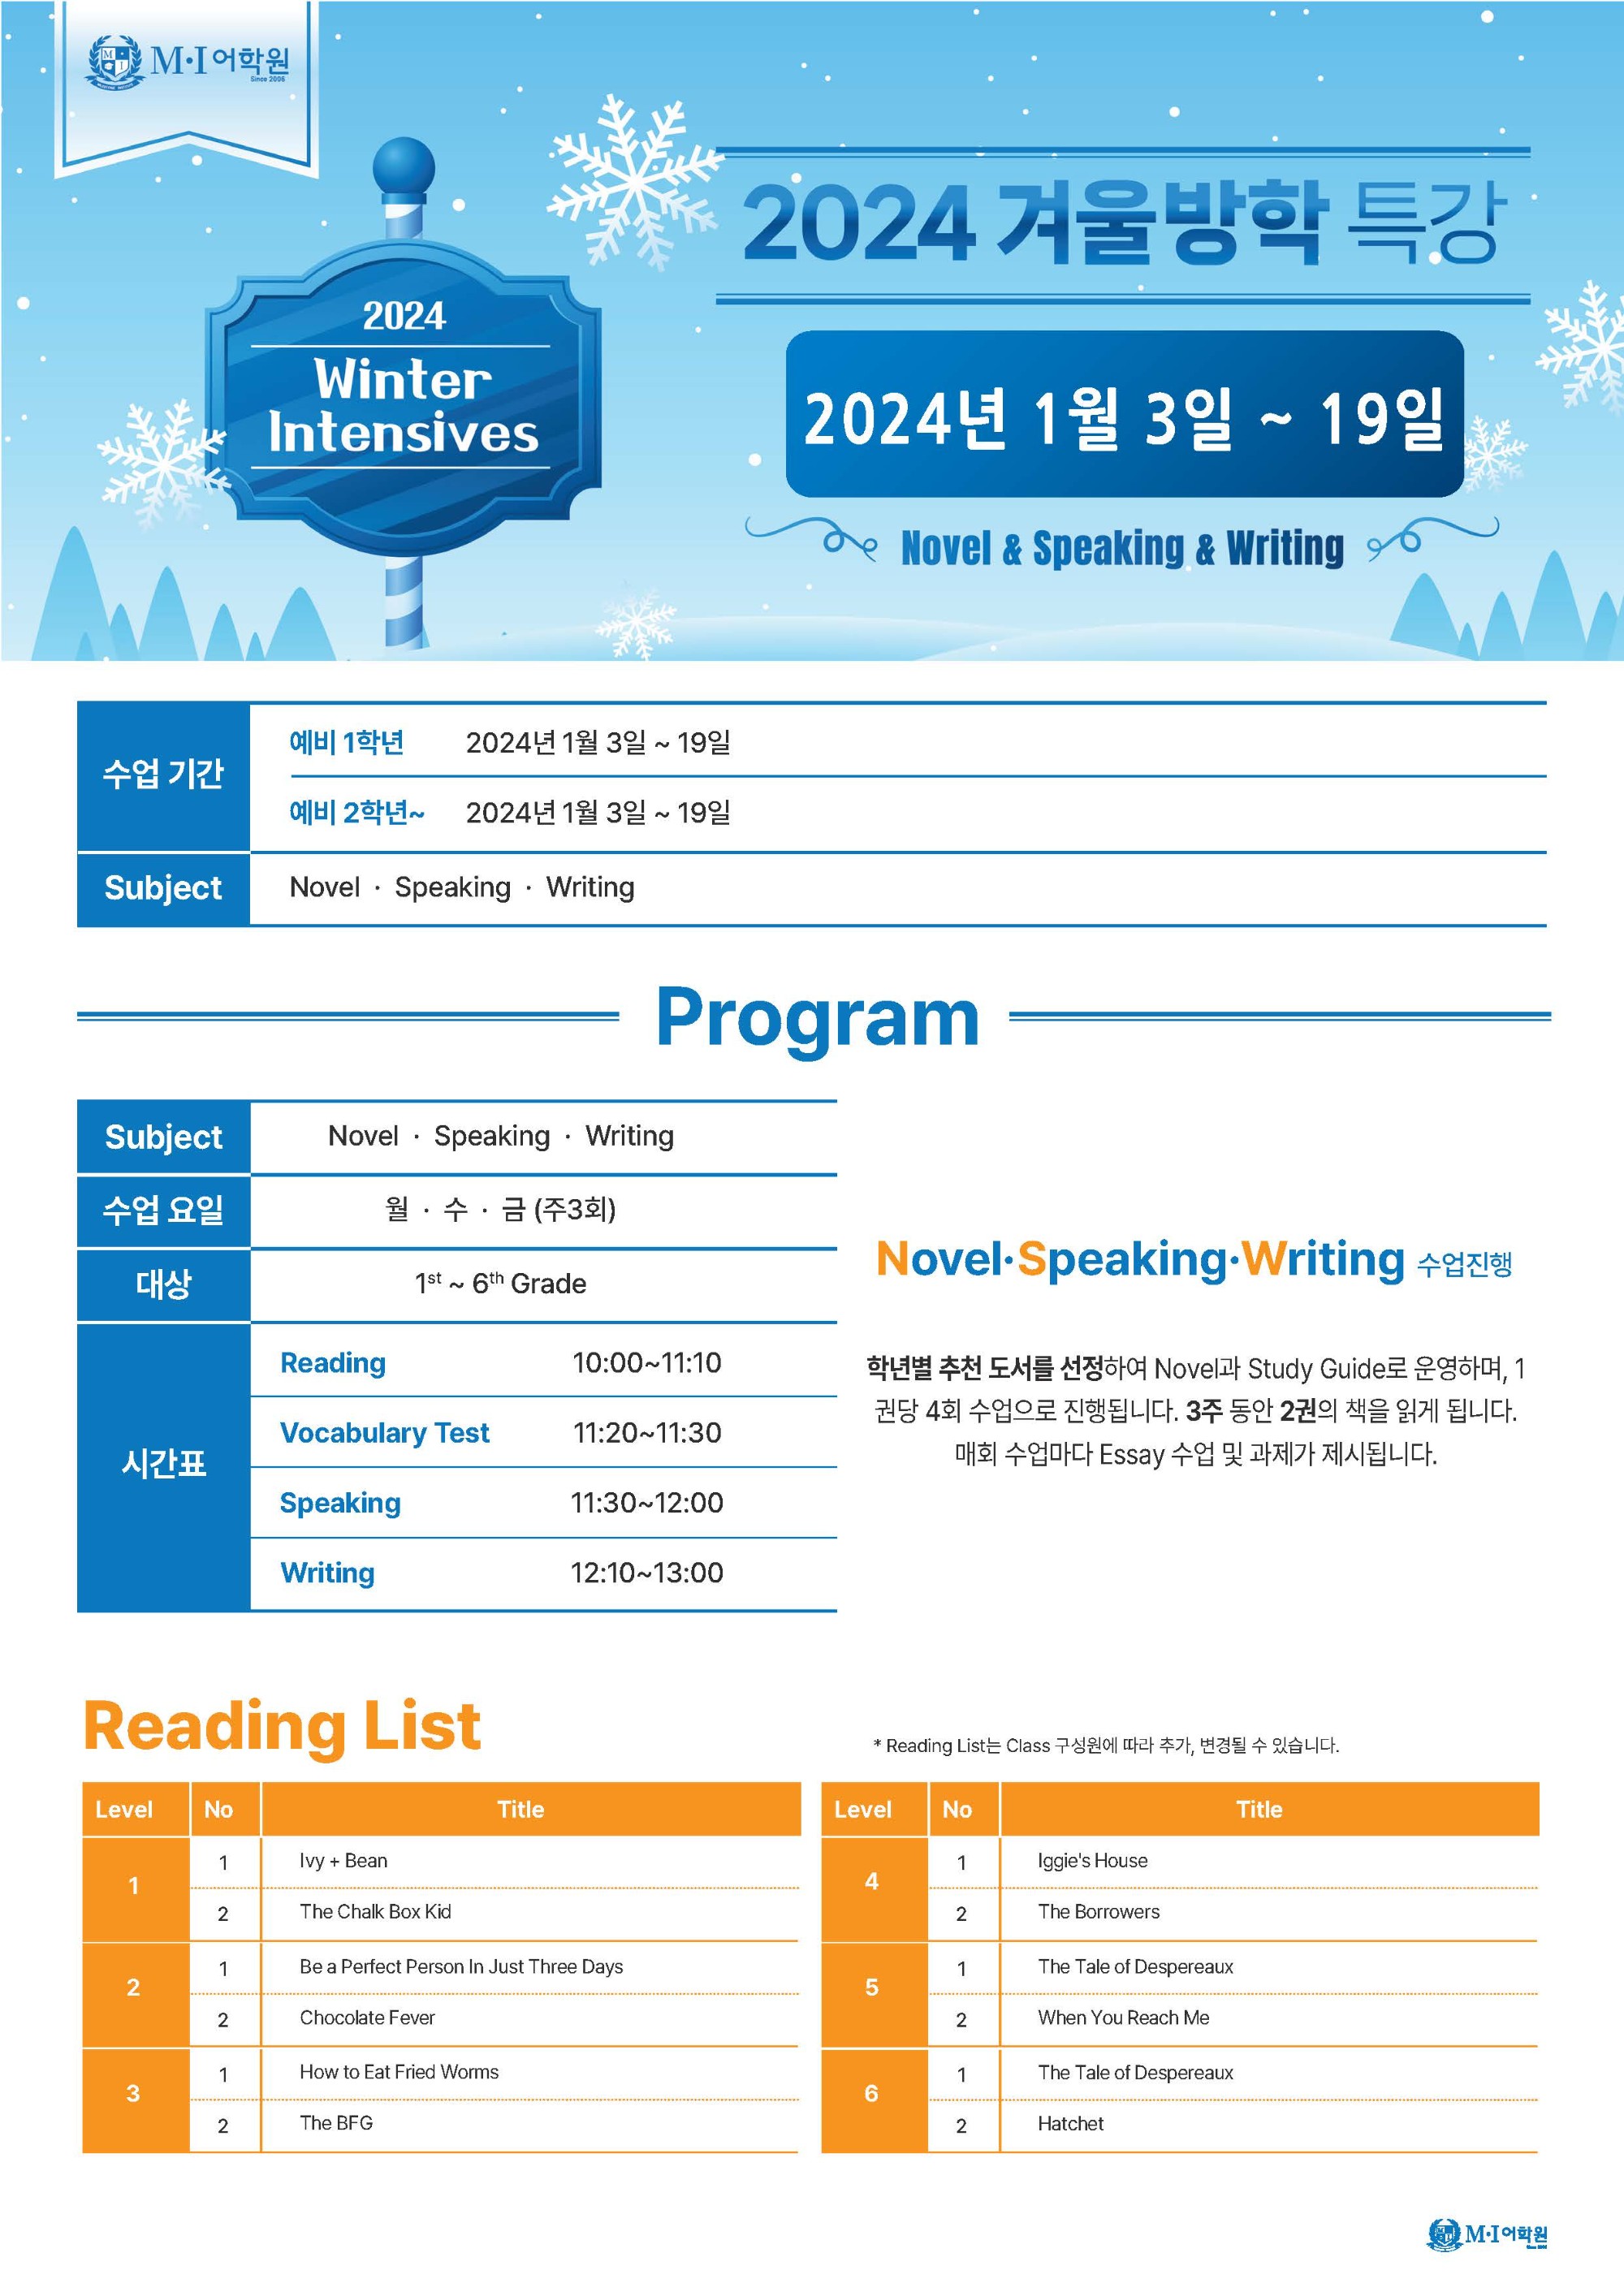 2024 Winter Intensives 안내장_1115 (1)_Page_1.jpg